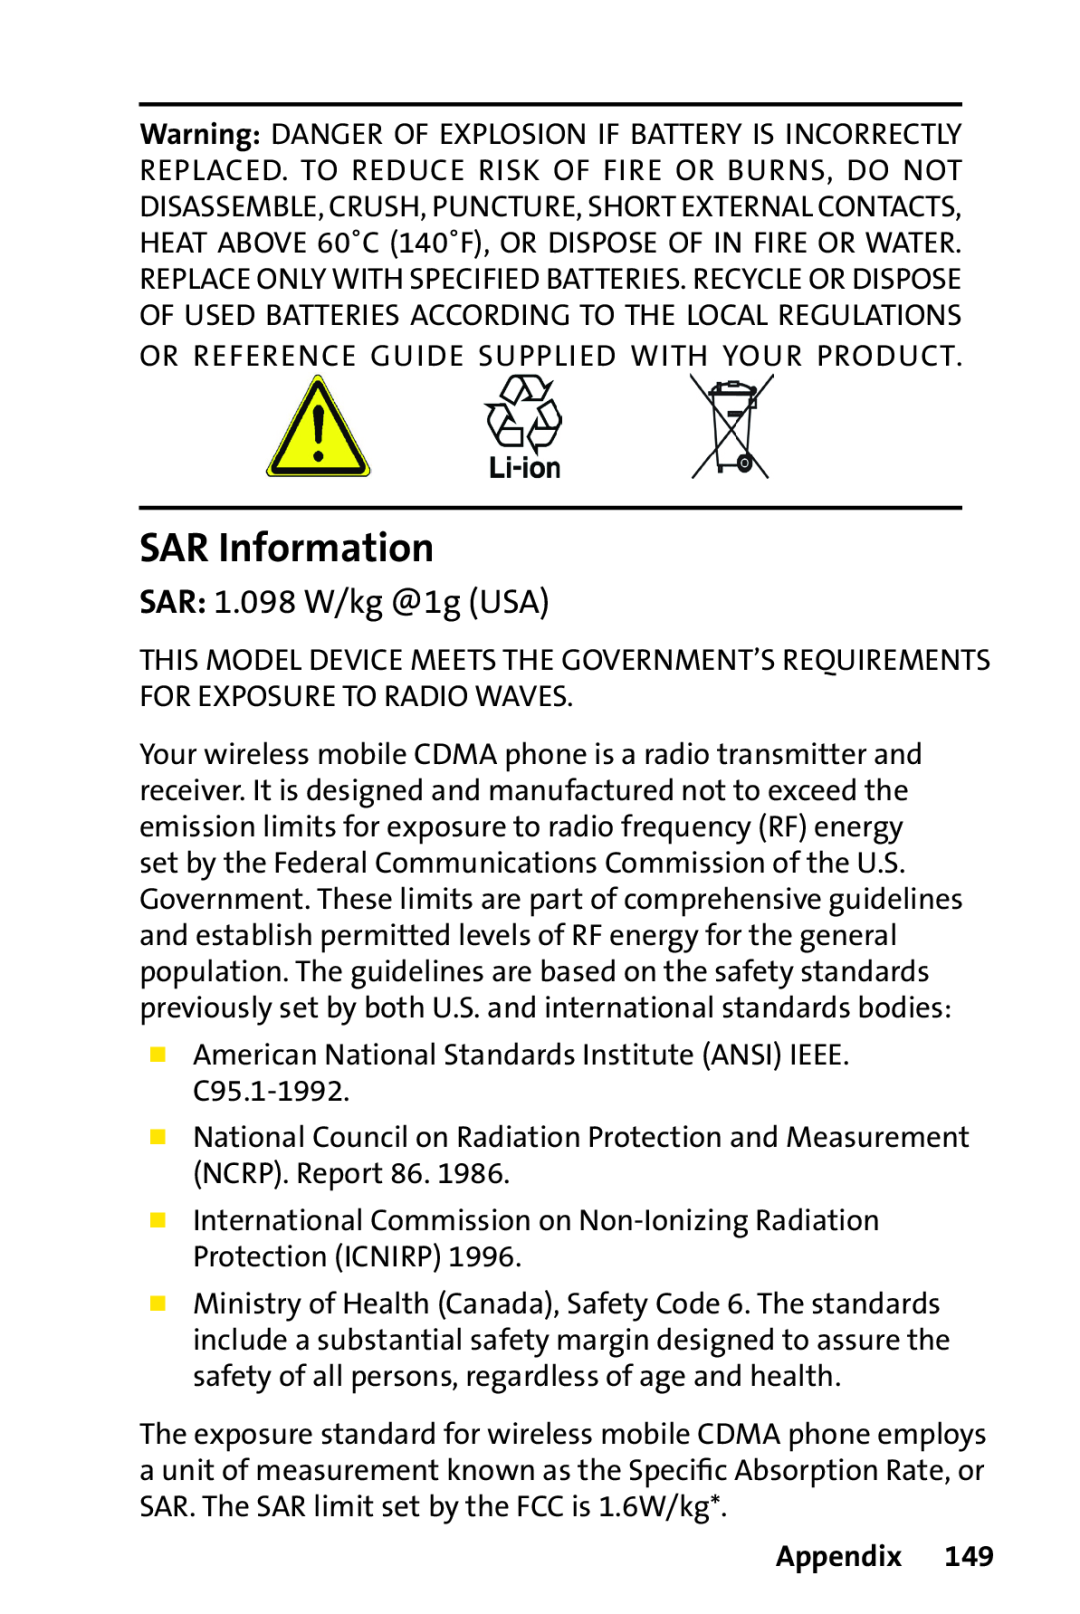 Sprint Nextel PPC-6700 manual SAR Information, SAR 1.098 W/kg @1g USA, Appendix 